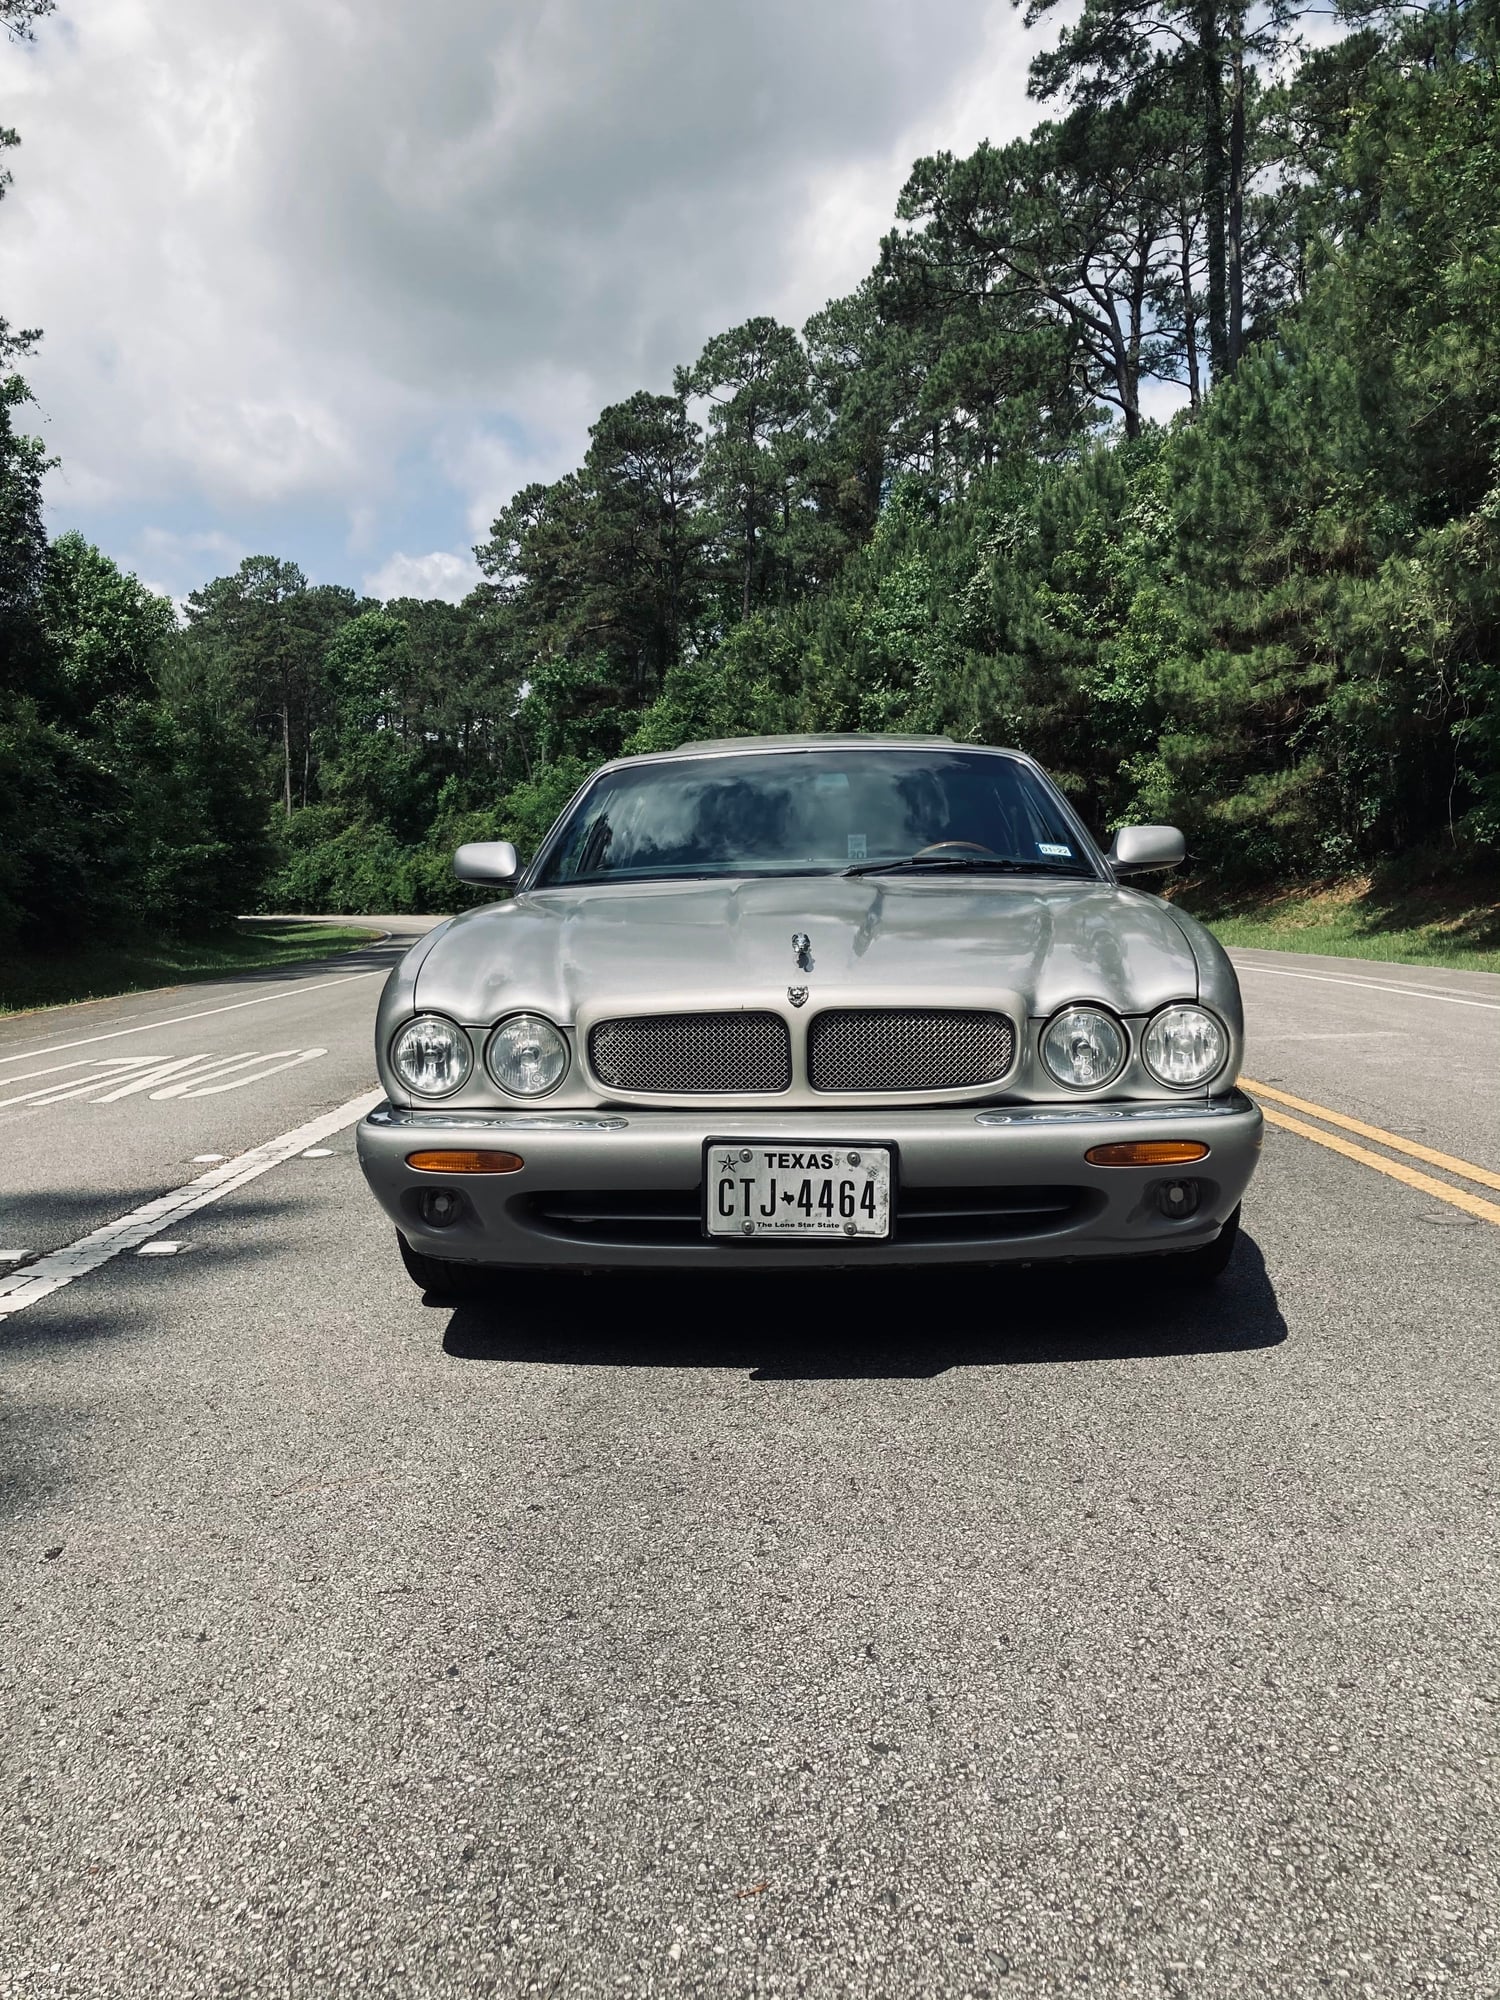 1999 Jaguar XJR - 99 XJR in Houston. - Used - VIN Sajpx1848xc860777 - 76,800 Miles - 8 cyl - 2WD - Automatic - Sedan - Silver - Houston, TX 77078, United States